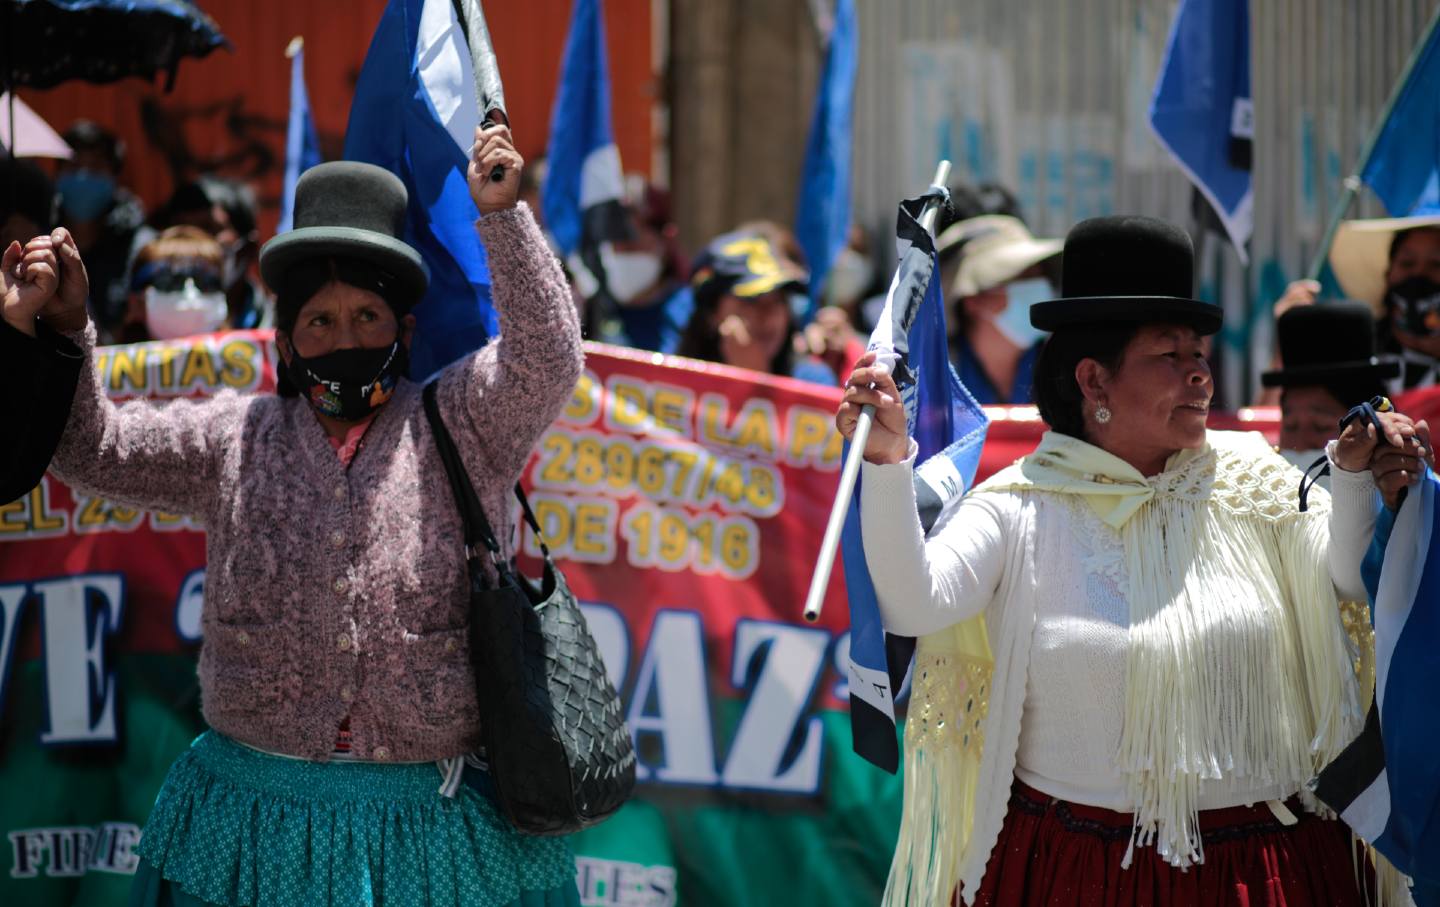 Bolivians Reclaim Their Democracy